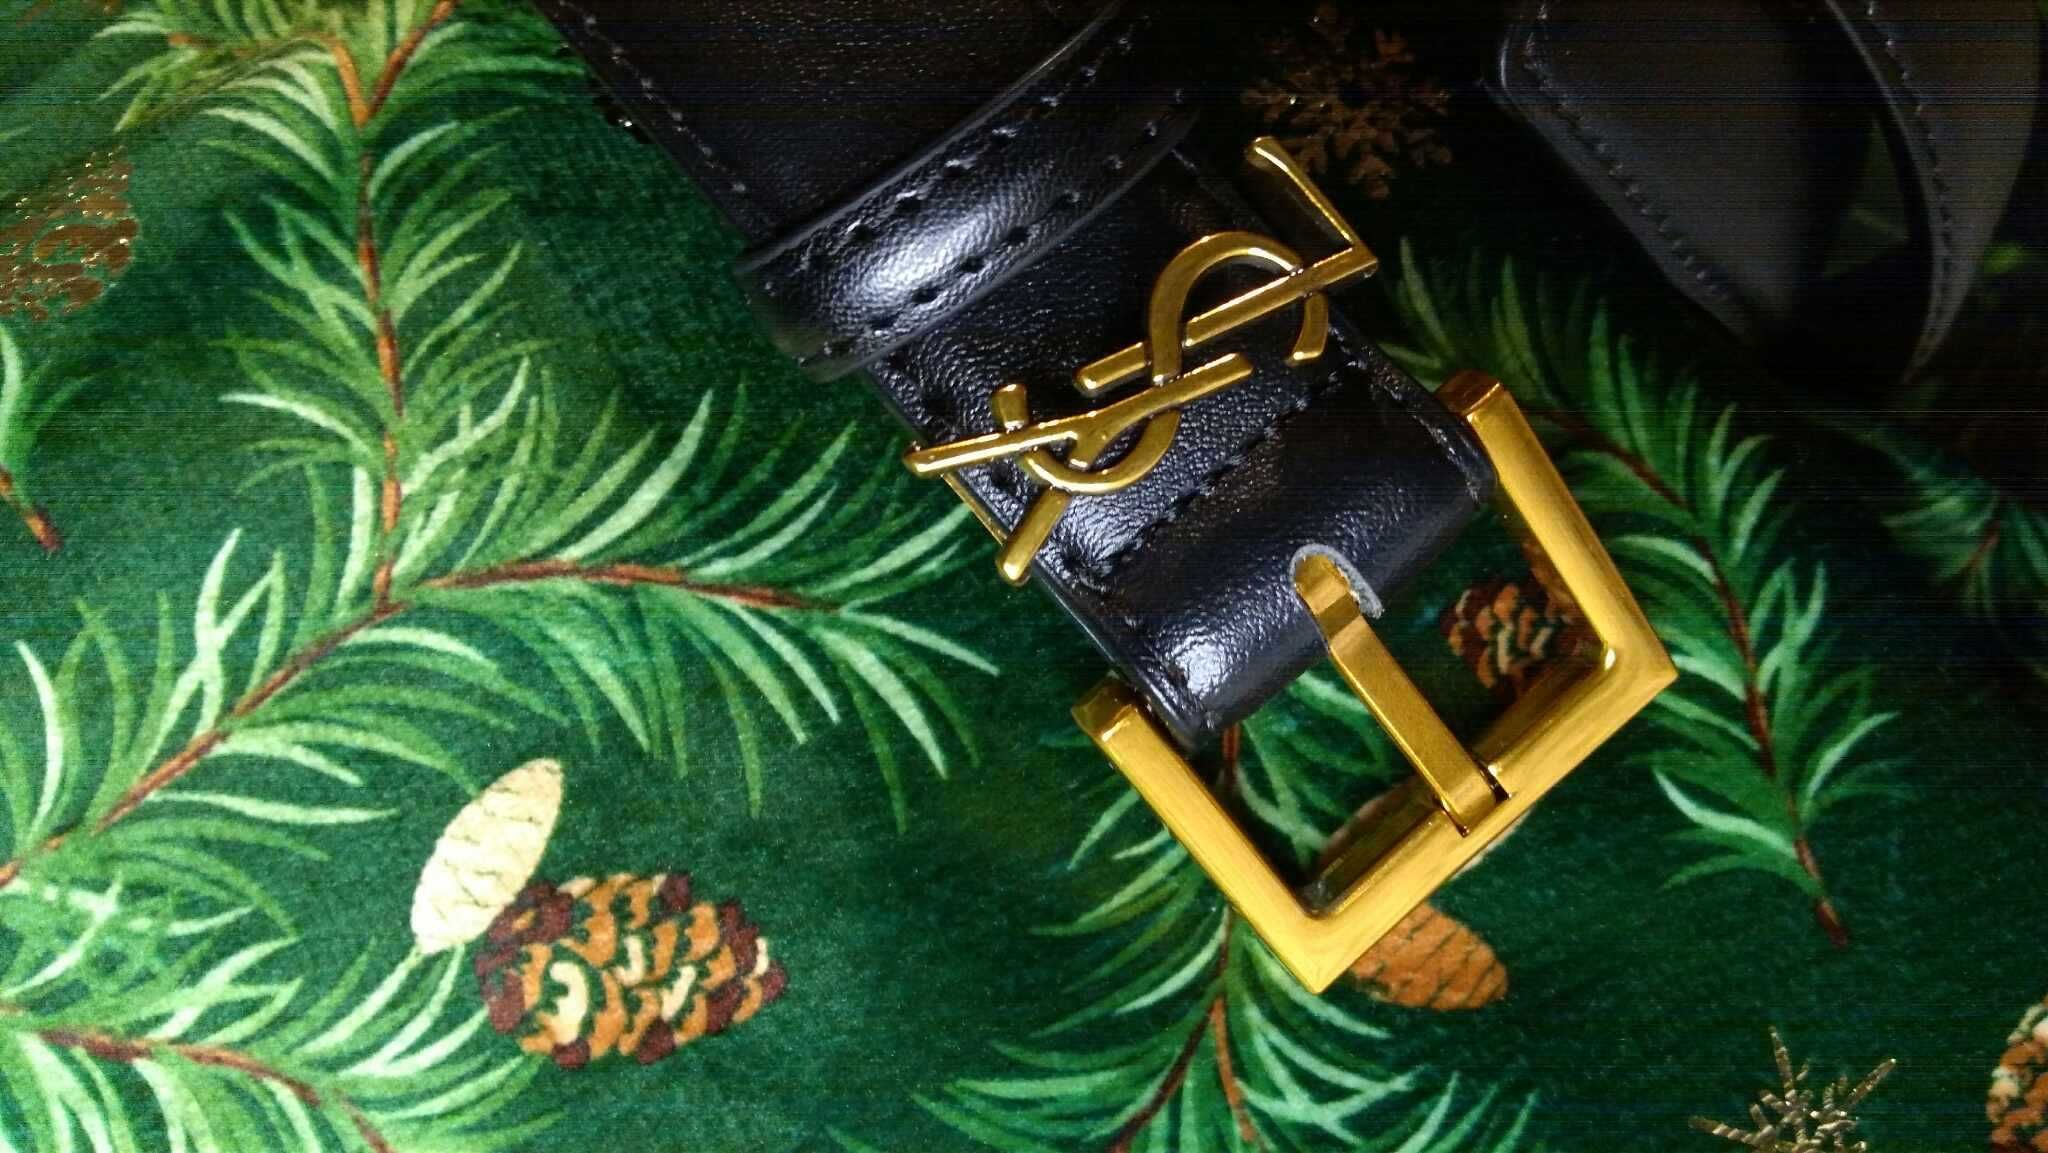 Pasek do spodni YSL złota klamra logowany  zdobiny literami modny cc